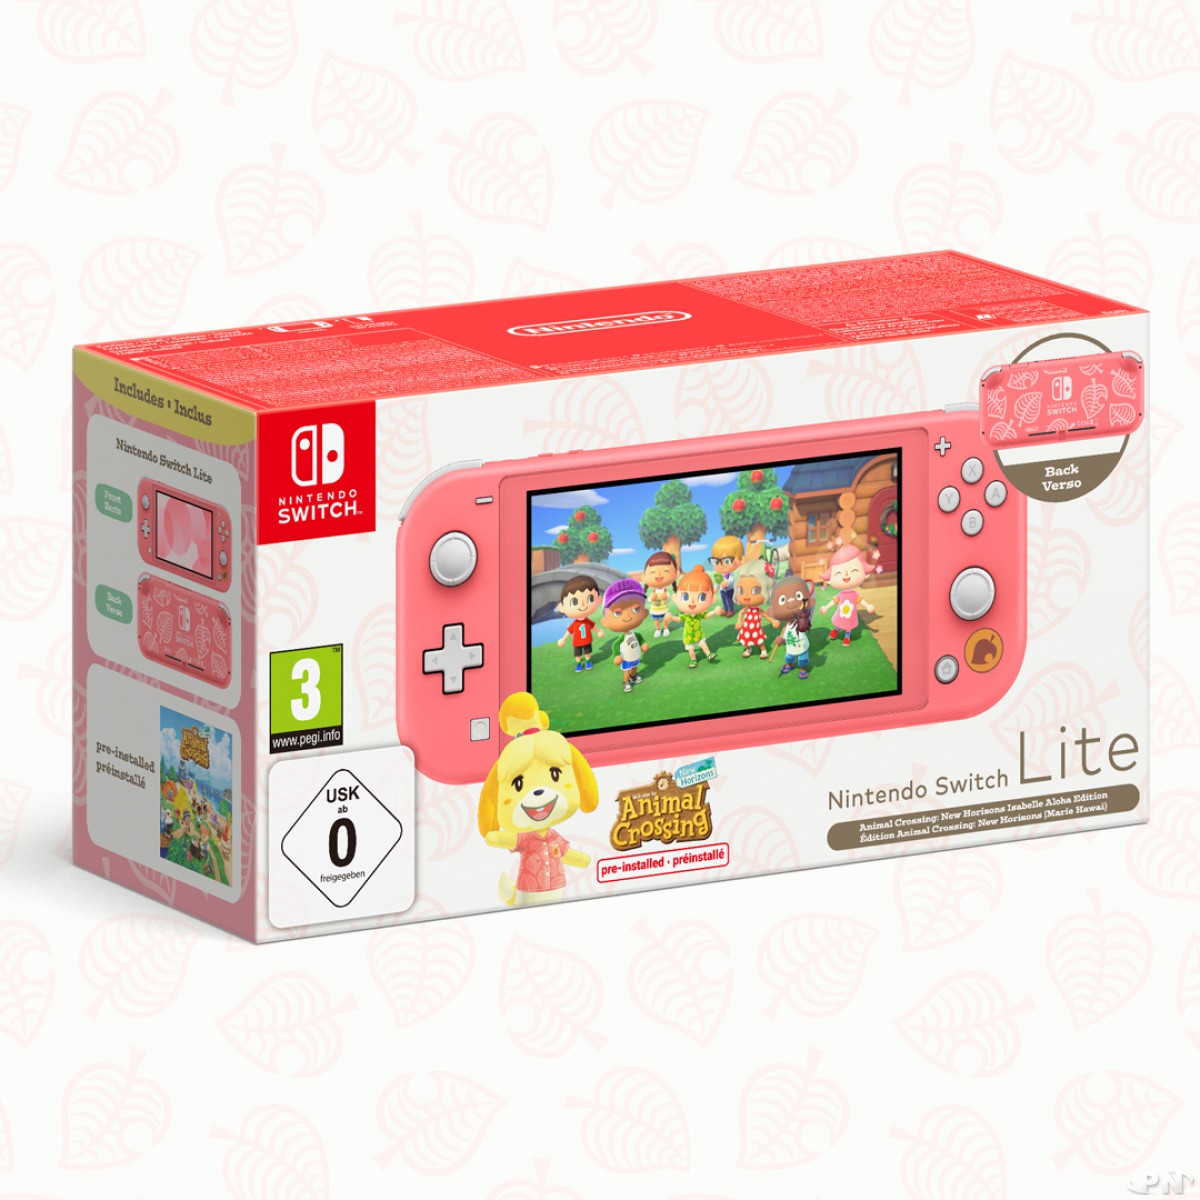 Nouveau bundle Nintendo Switch Lite avec Animal Crossing: New Horizons (corail)